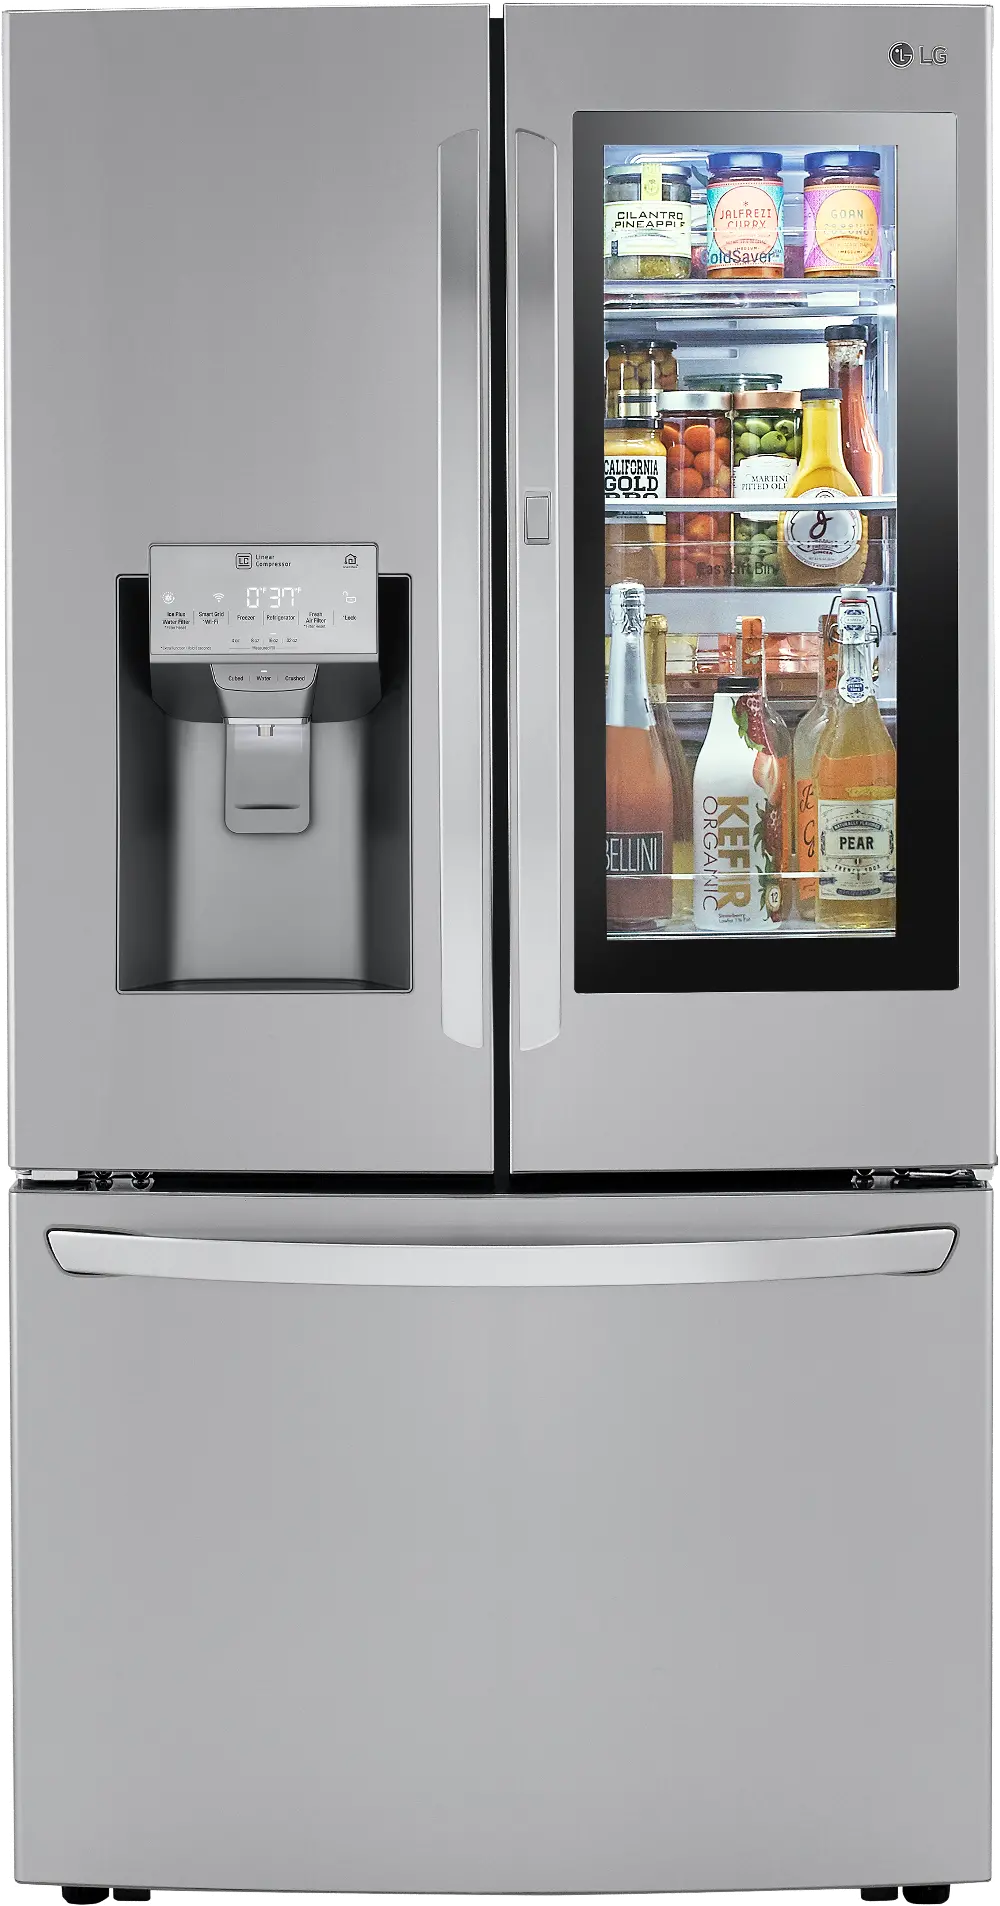 LRFVS3006S LG 29.7 cu ft French Door Refrigerator - Stainless Steel-1